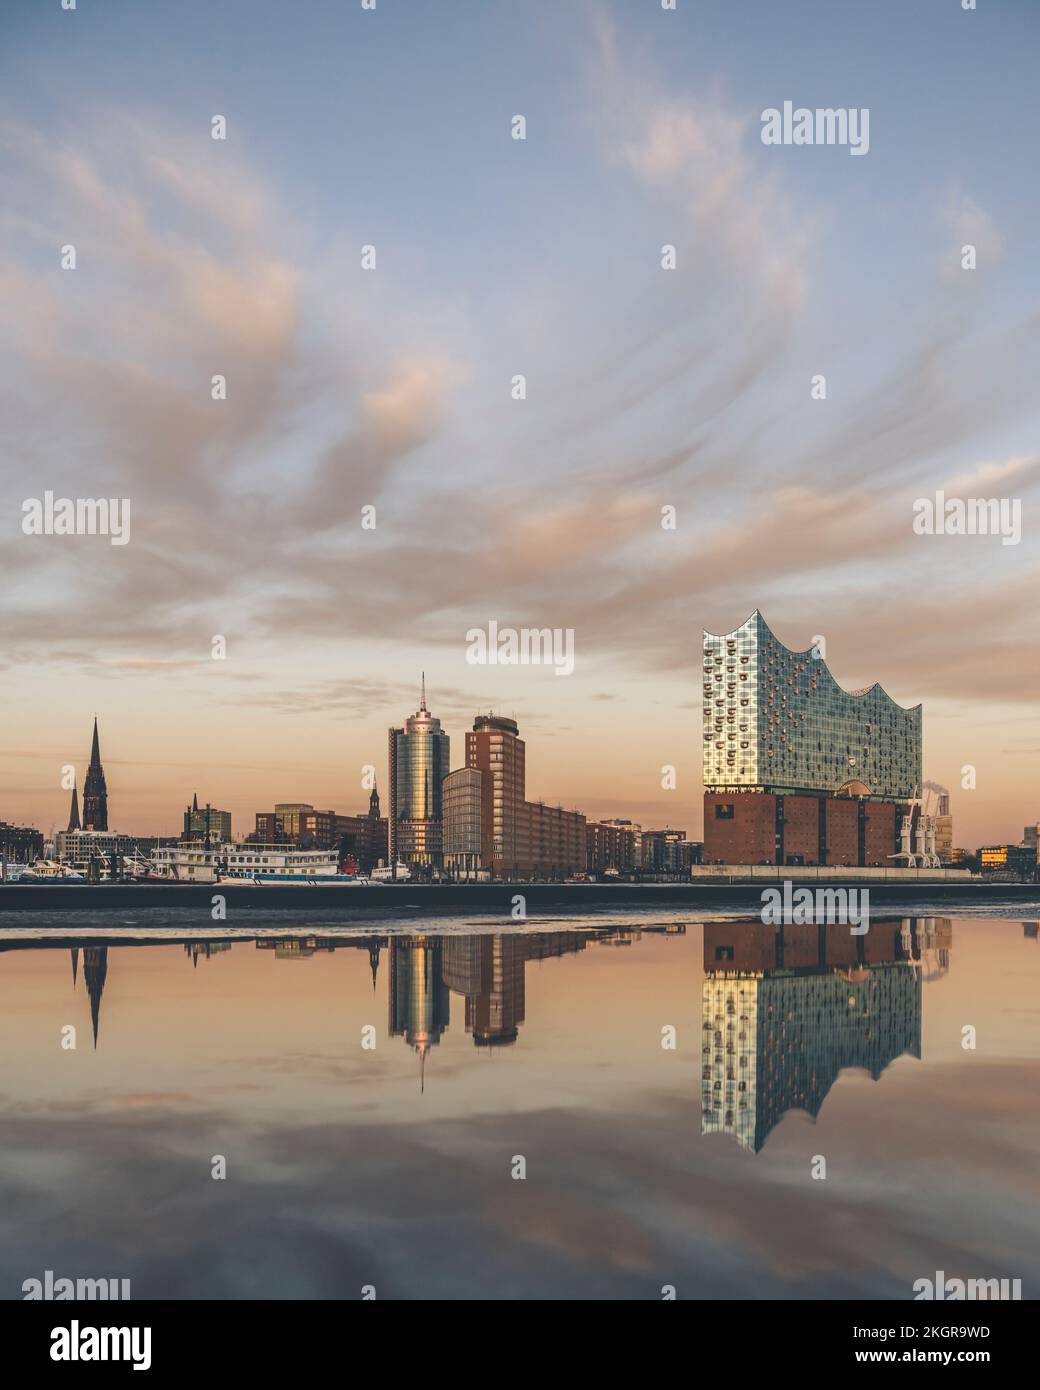 Germania, Amburgo, Elbphilharmonie riflettendo nel fiume Elba al crepuscolo Foto Stock